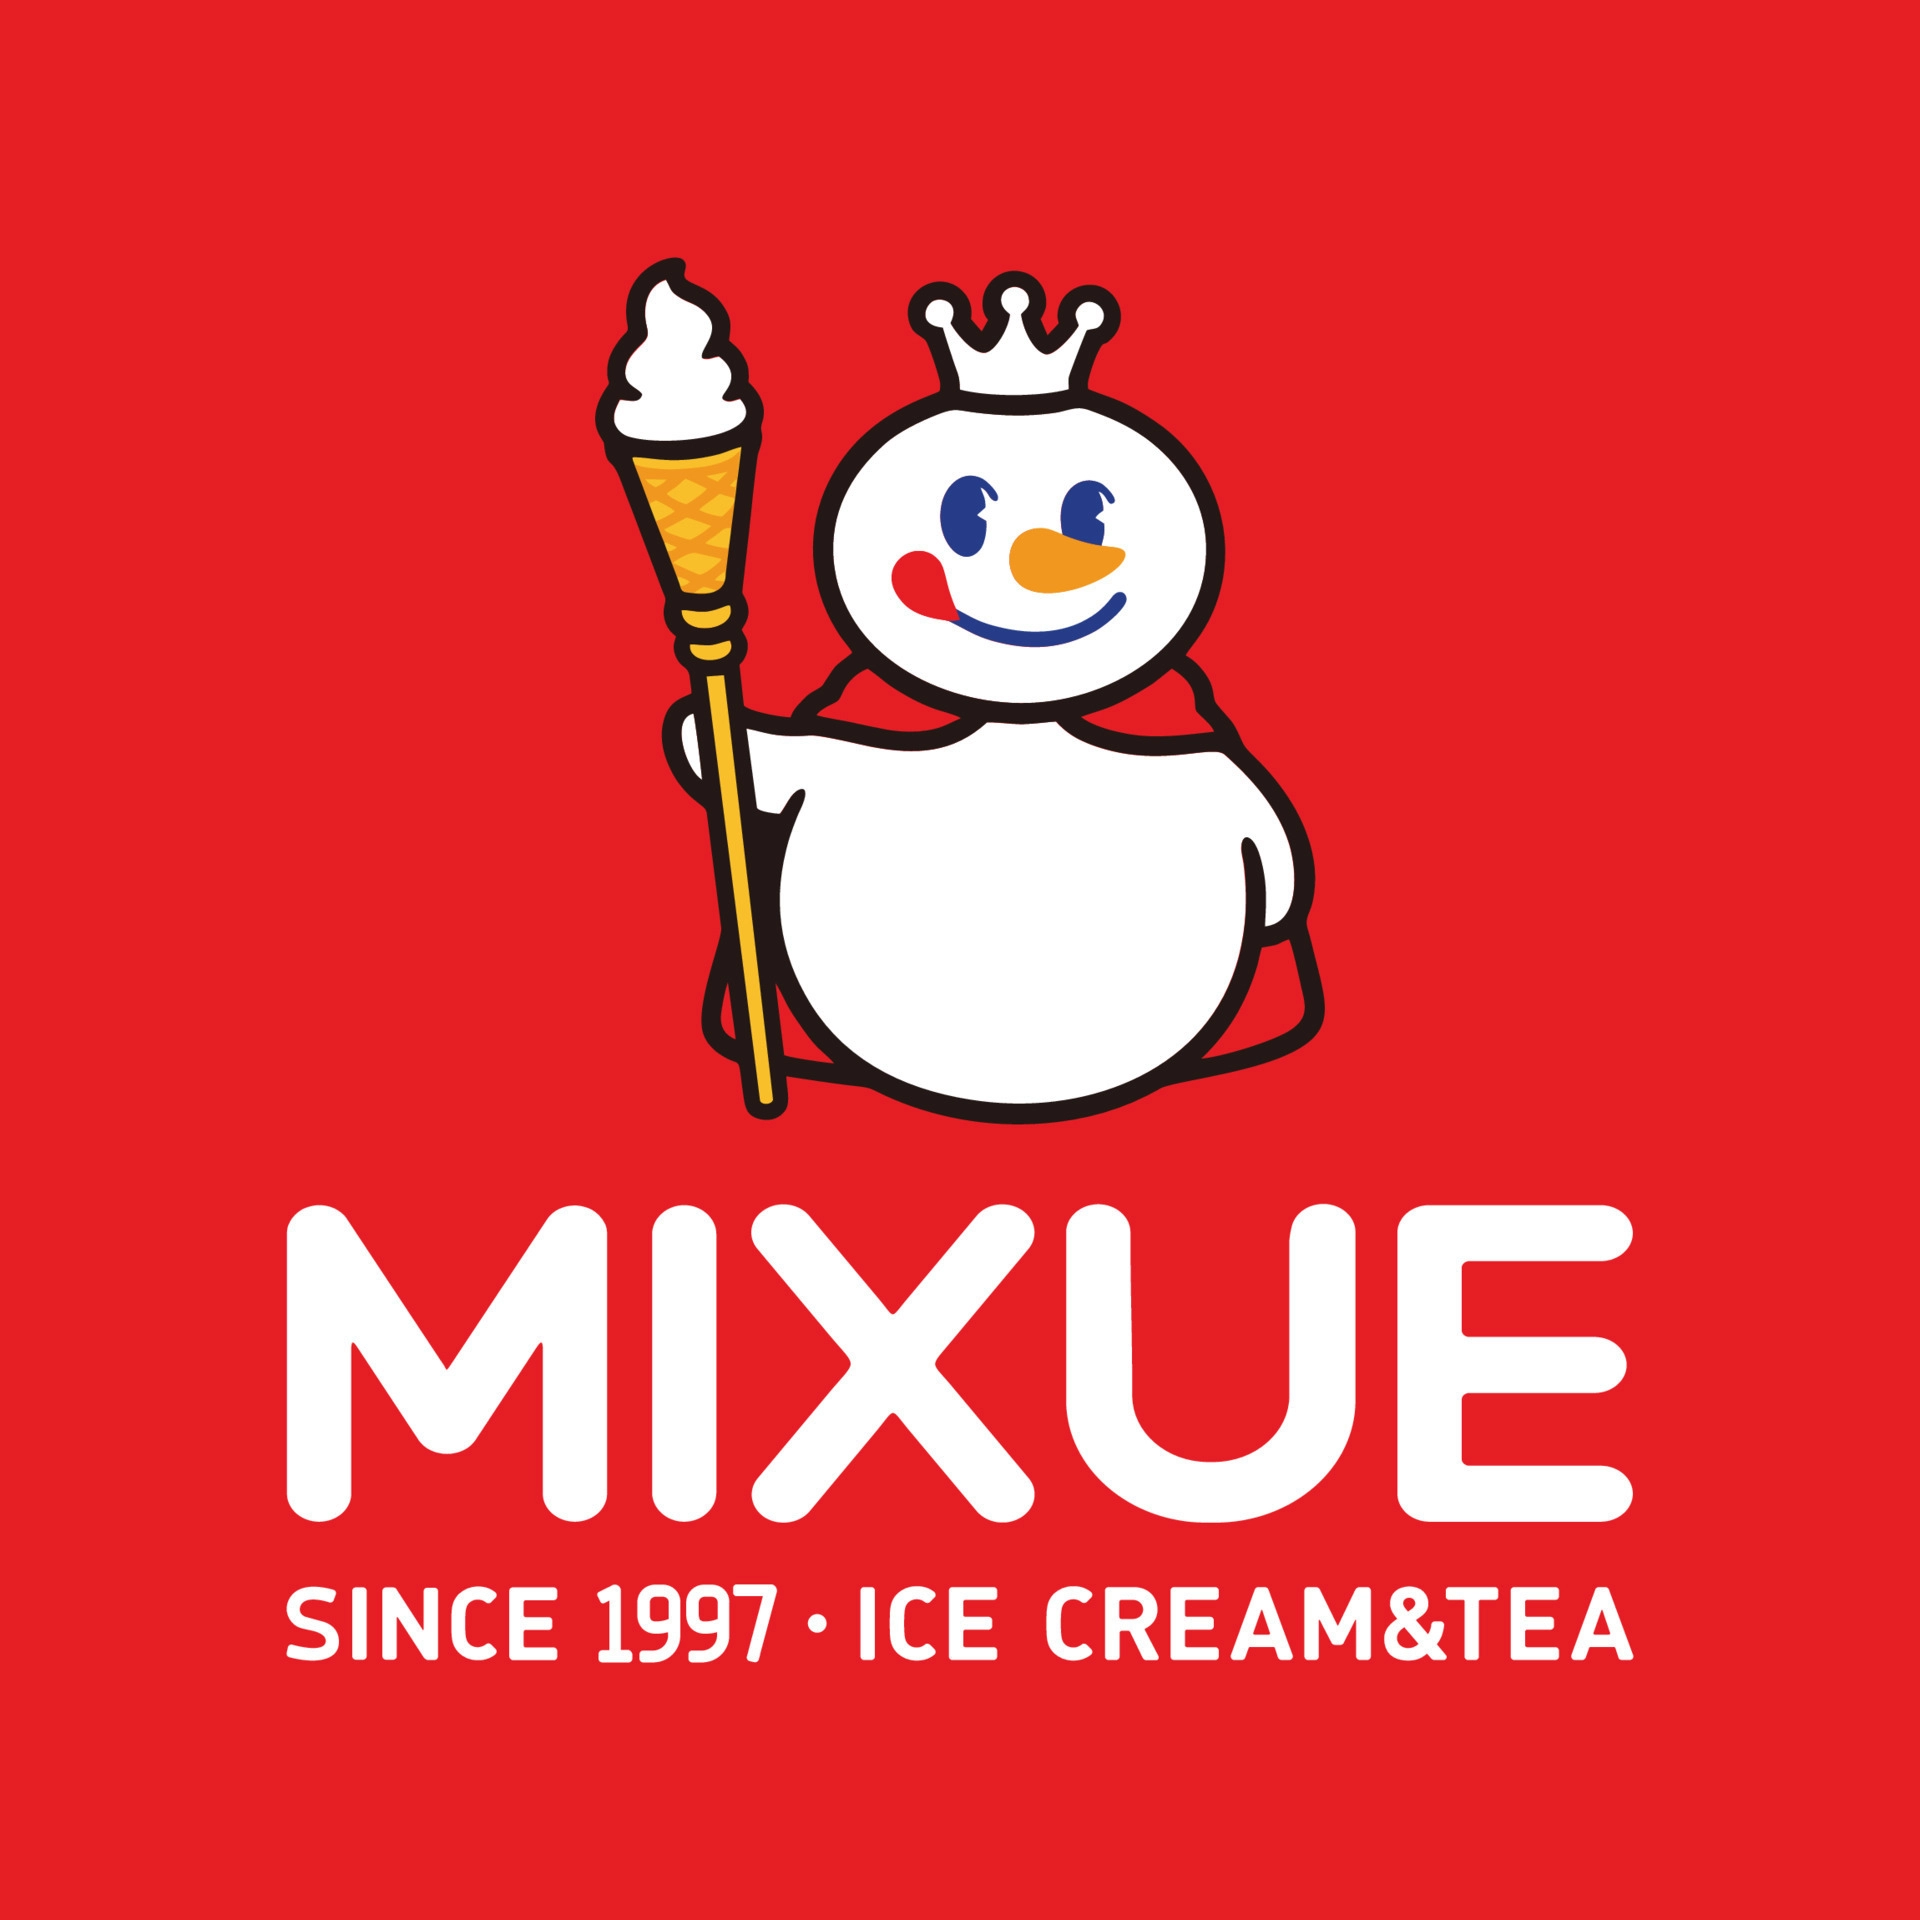 mixue-logo-design-banner-mixue-logo-icon-with-red-background-free-vector